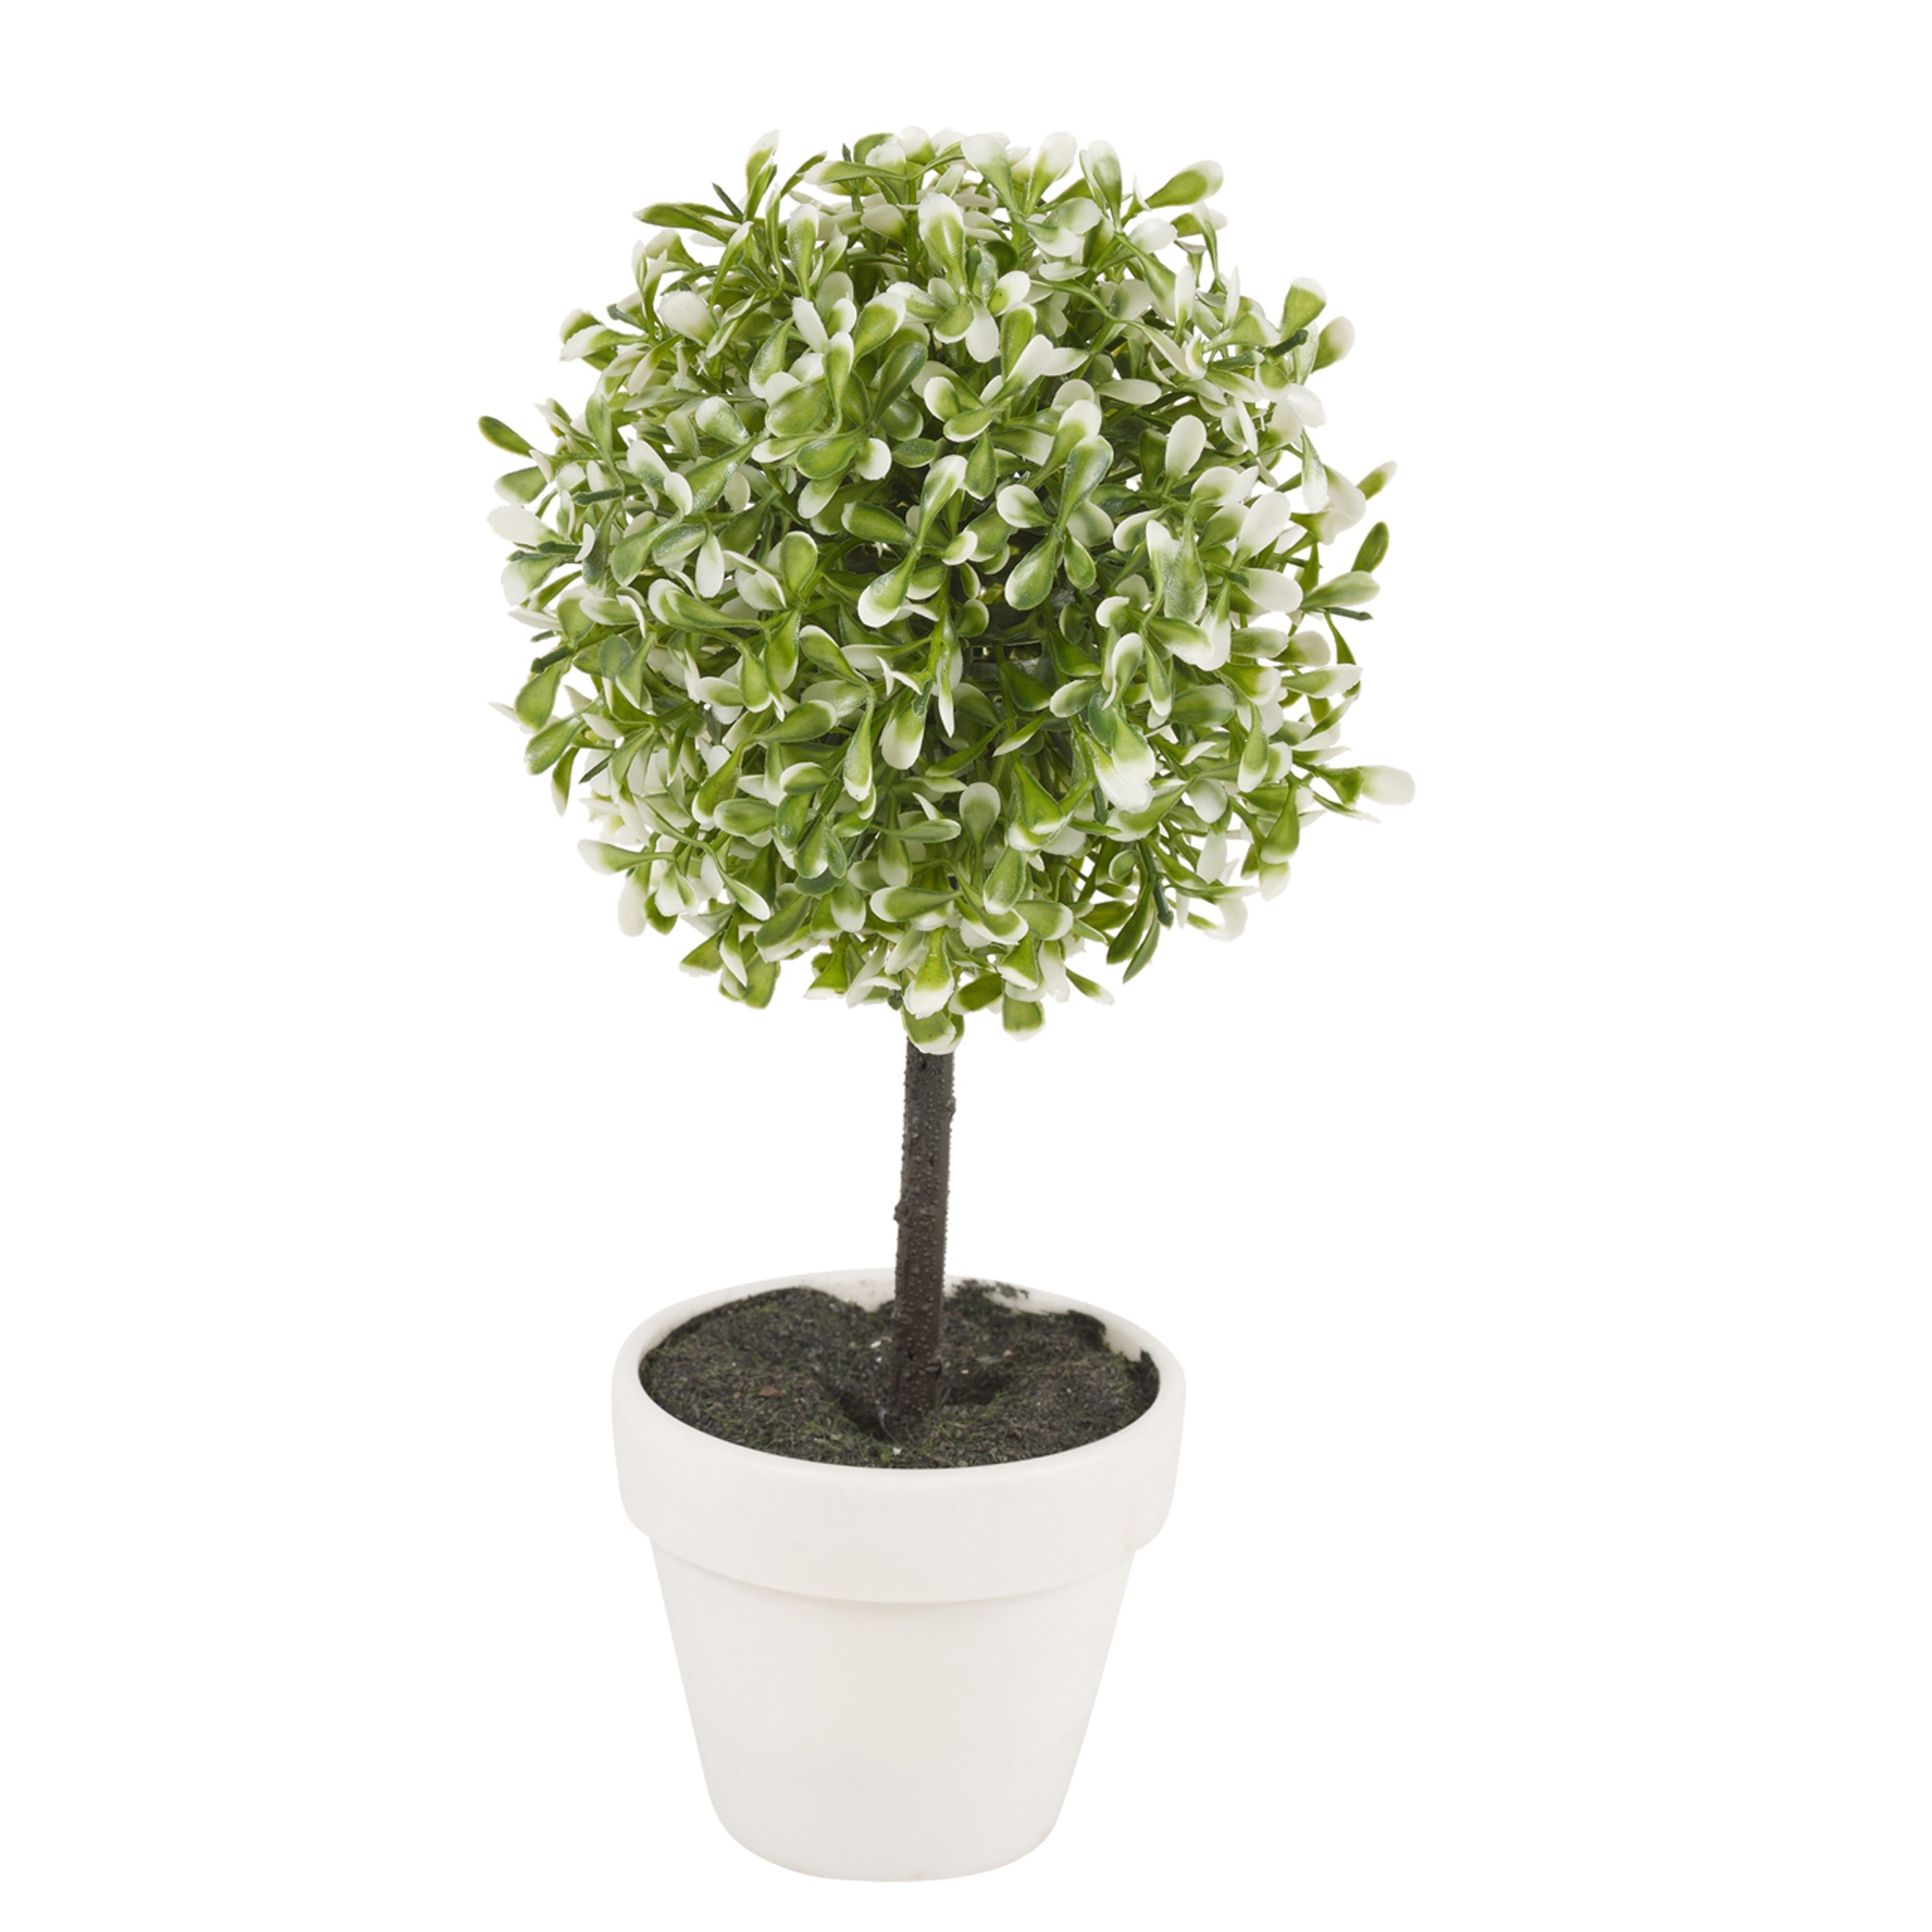 Easygift DECORATIVE ARTIFICIAL BALL PLANT Green, Medium, 1 Plant